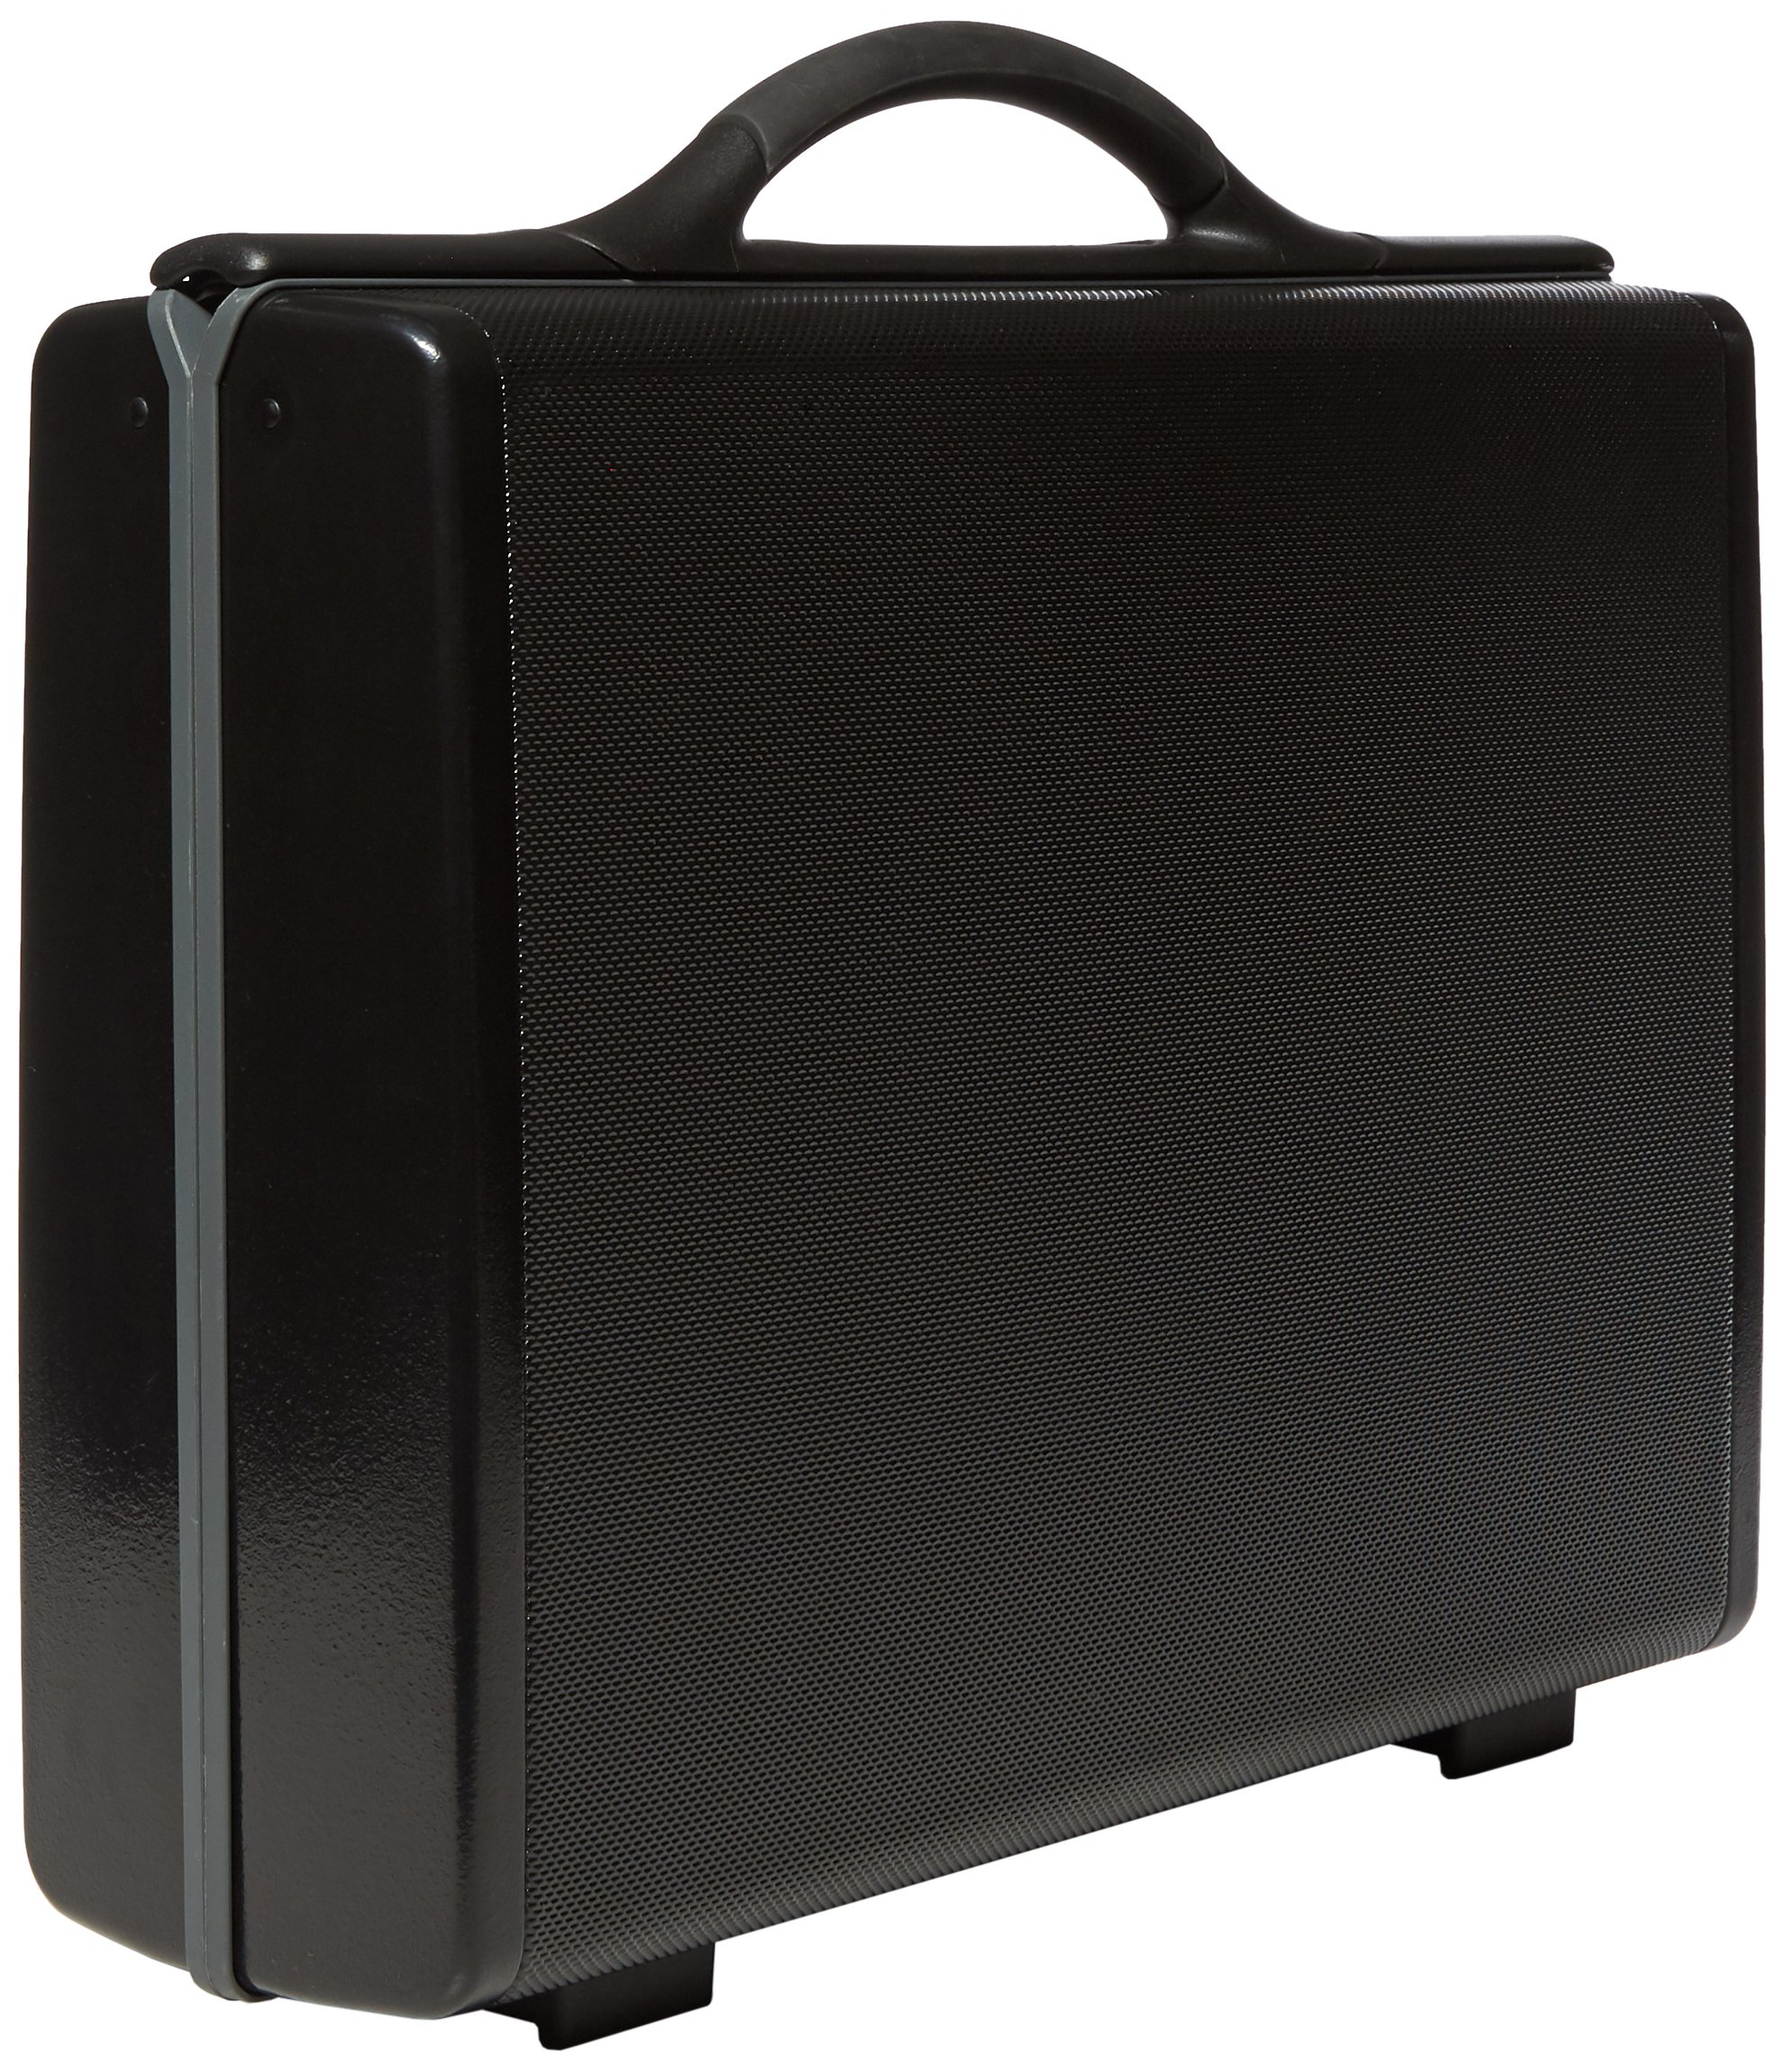 Samsonite briefcases Focus III Attache, Black, One Size